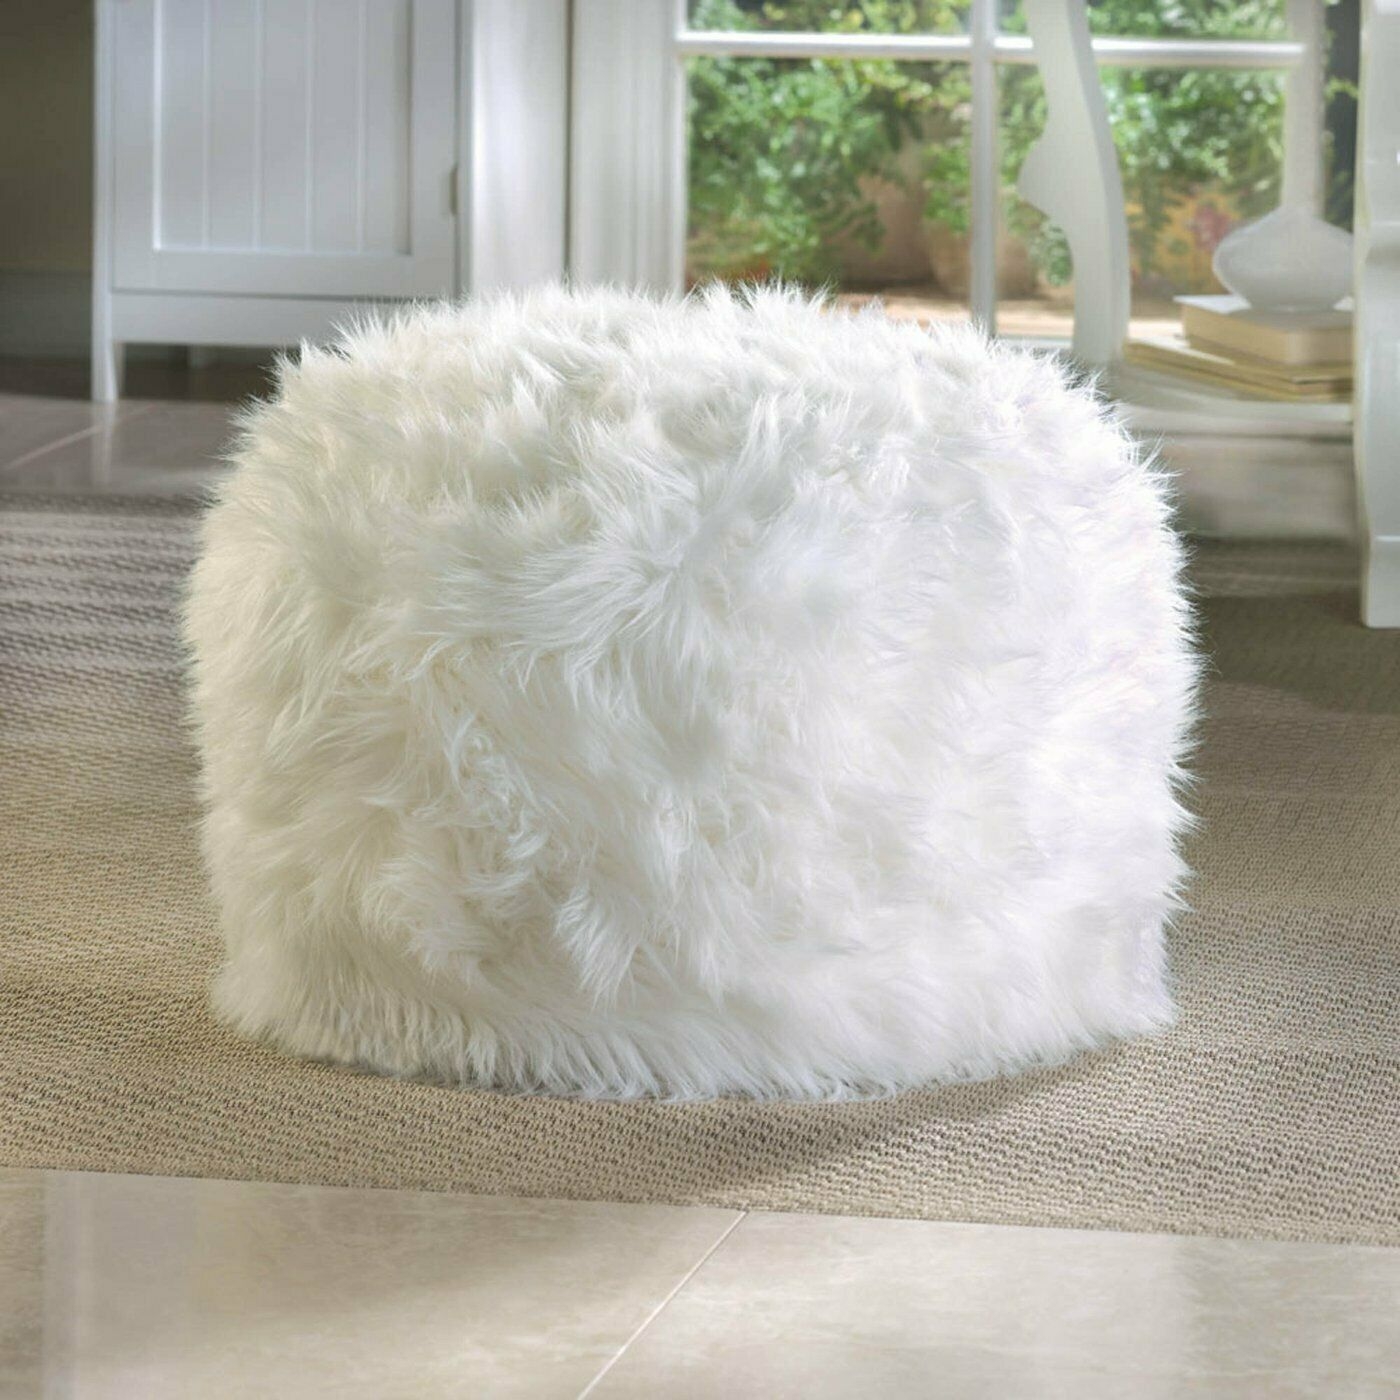 WHITE Fuzzy Furry Footstool Floor Pillow cushion Seat Fabric Bean Bag Ottoman POUF